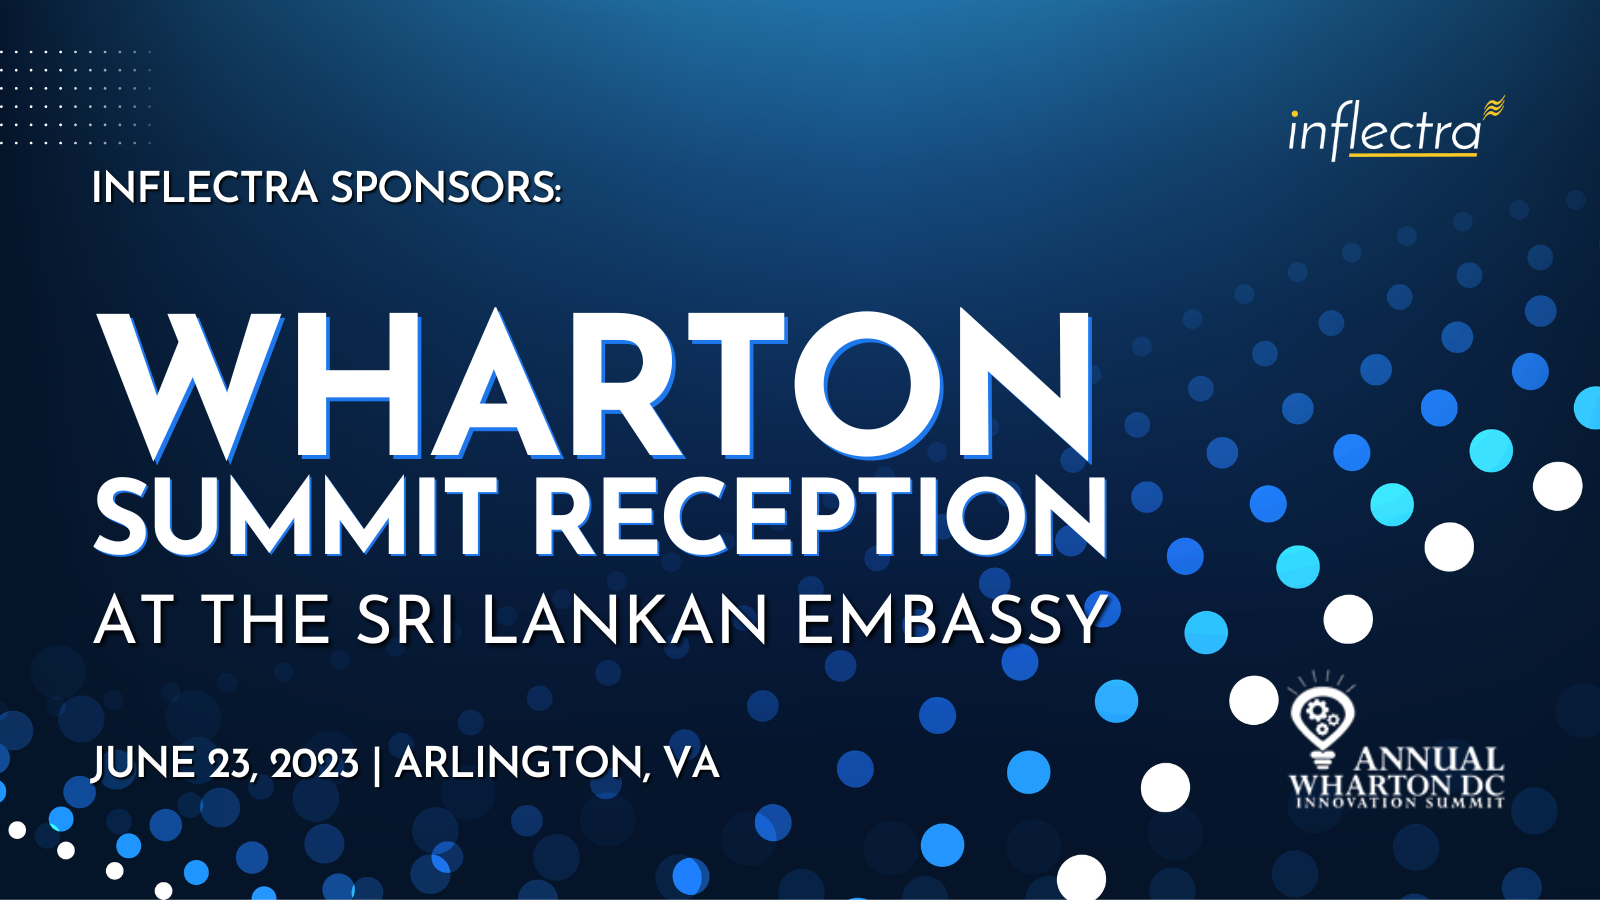 inflectra-sponsors-wharton-summit-reception-sri-lankan-embassy-in-arlington-virginia-image